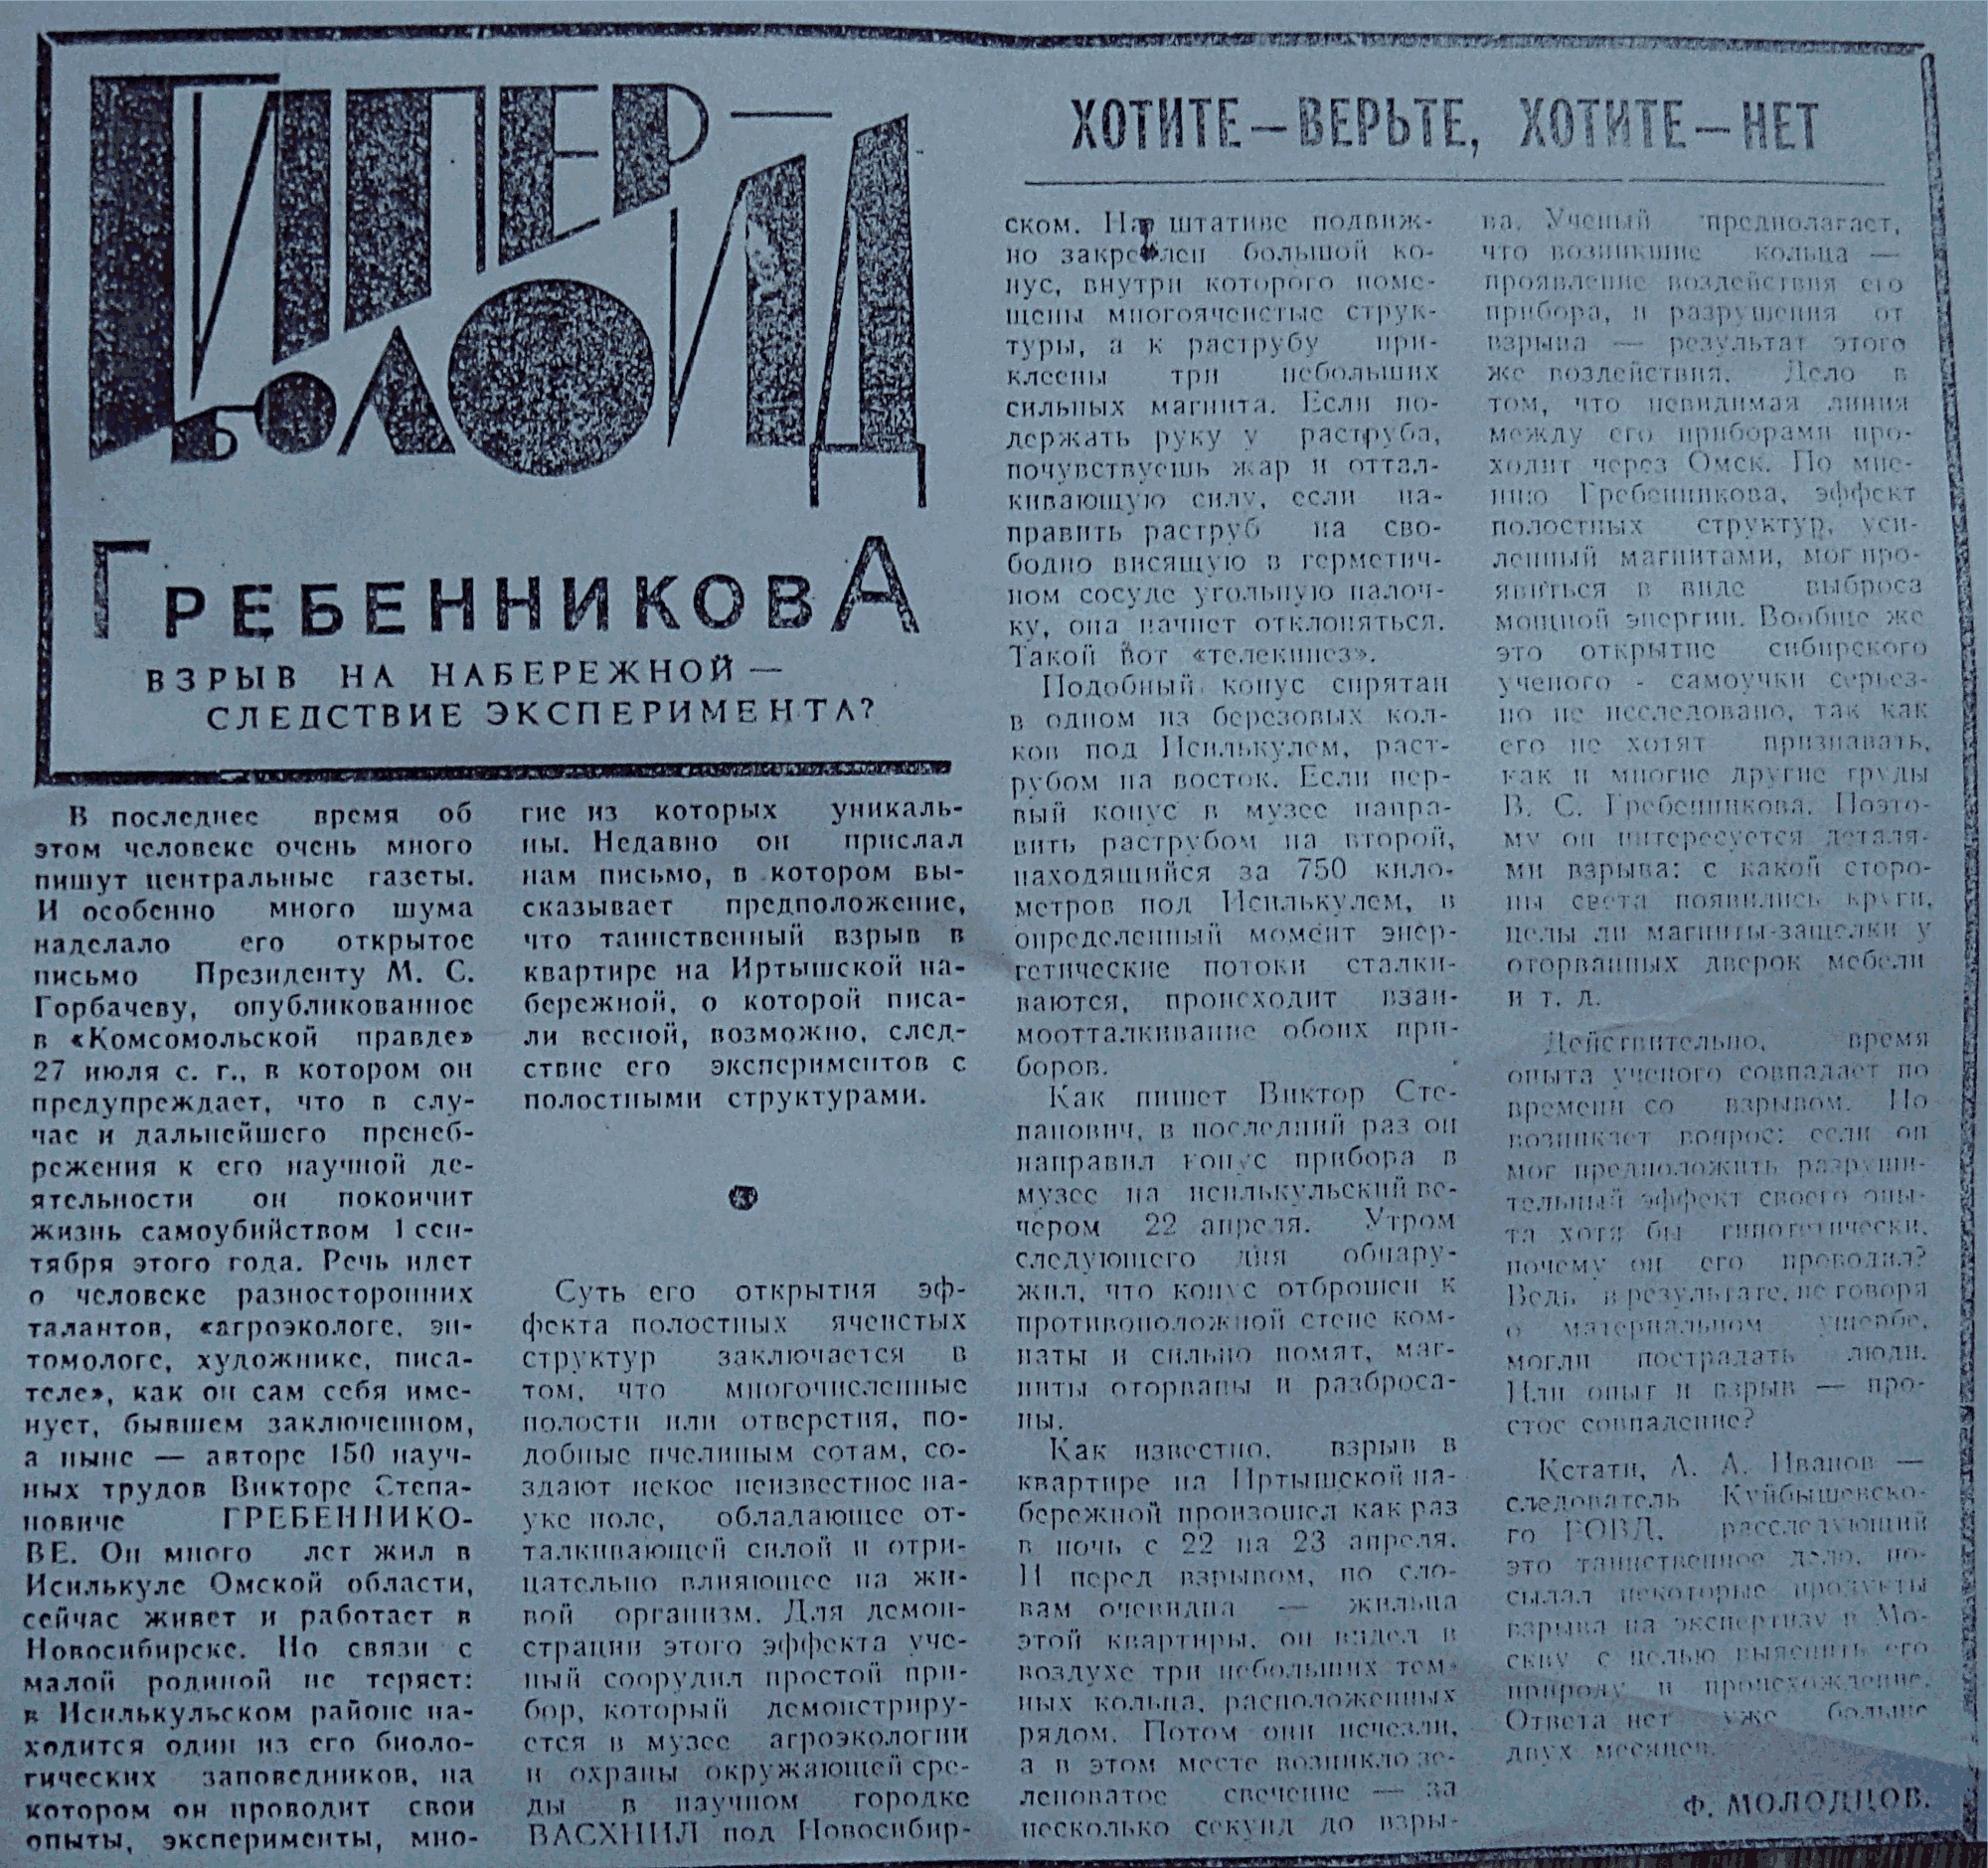 Гиперболоид Гребенникова. Ф. Молодцов. Вечерний Омск, 05.08.1991